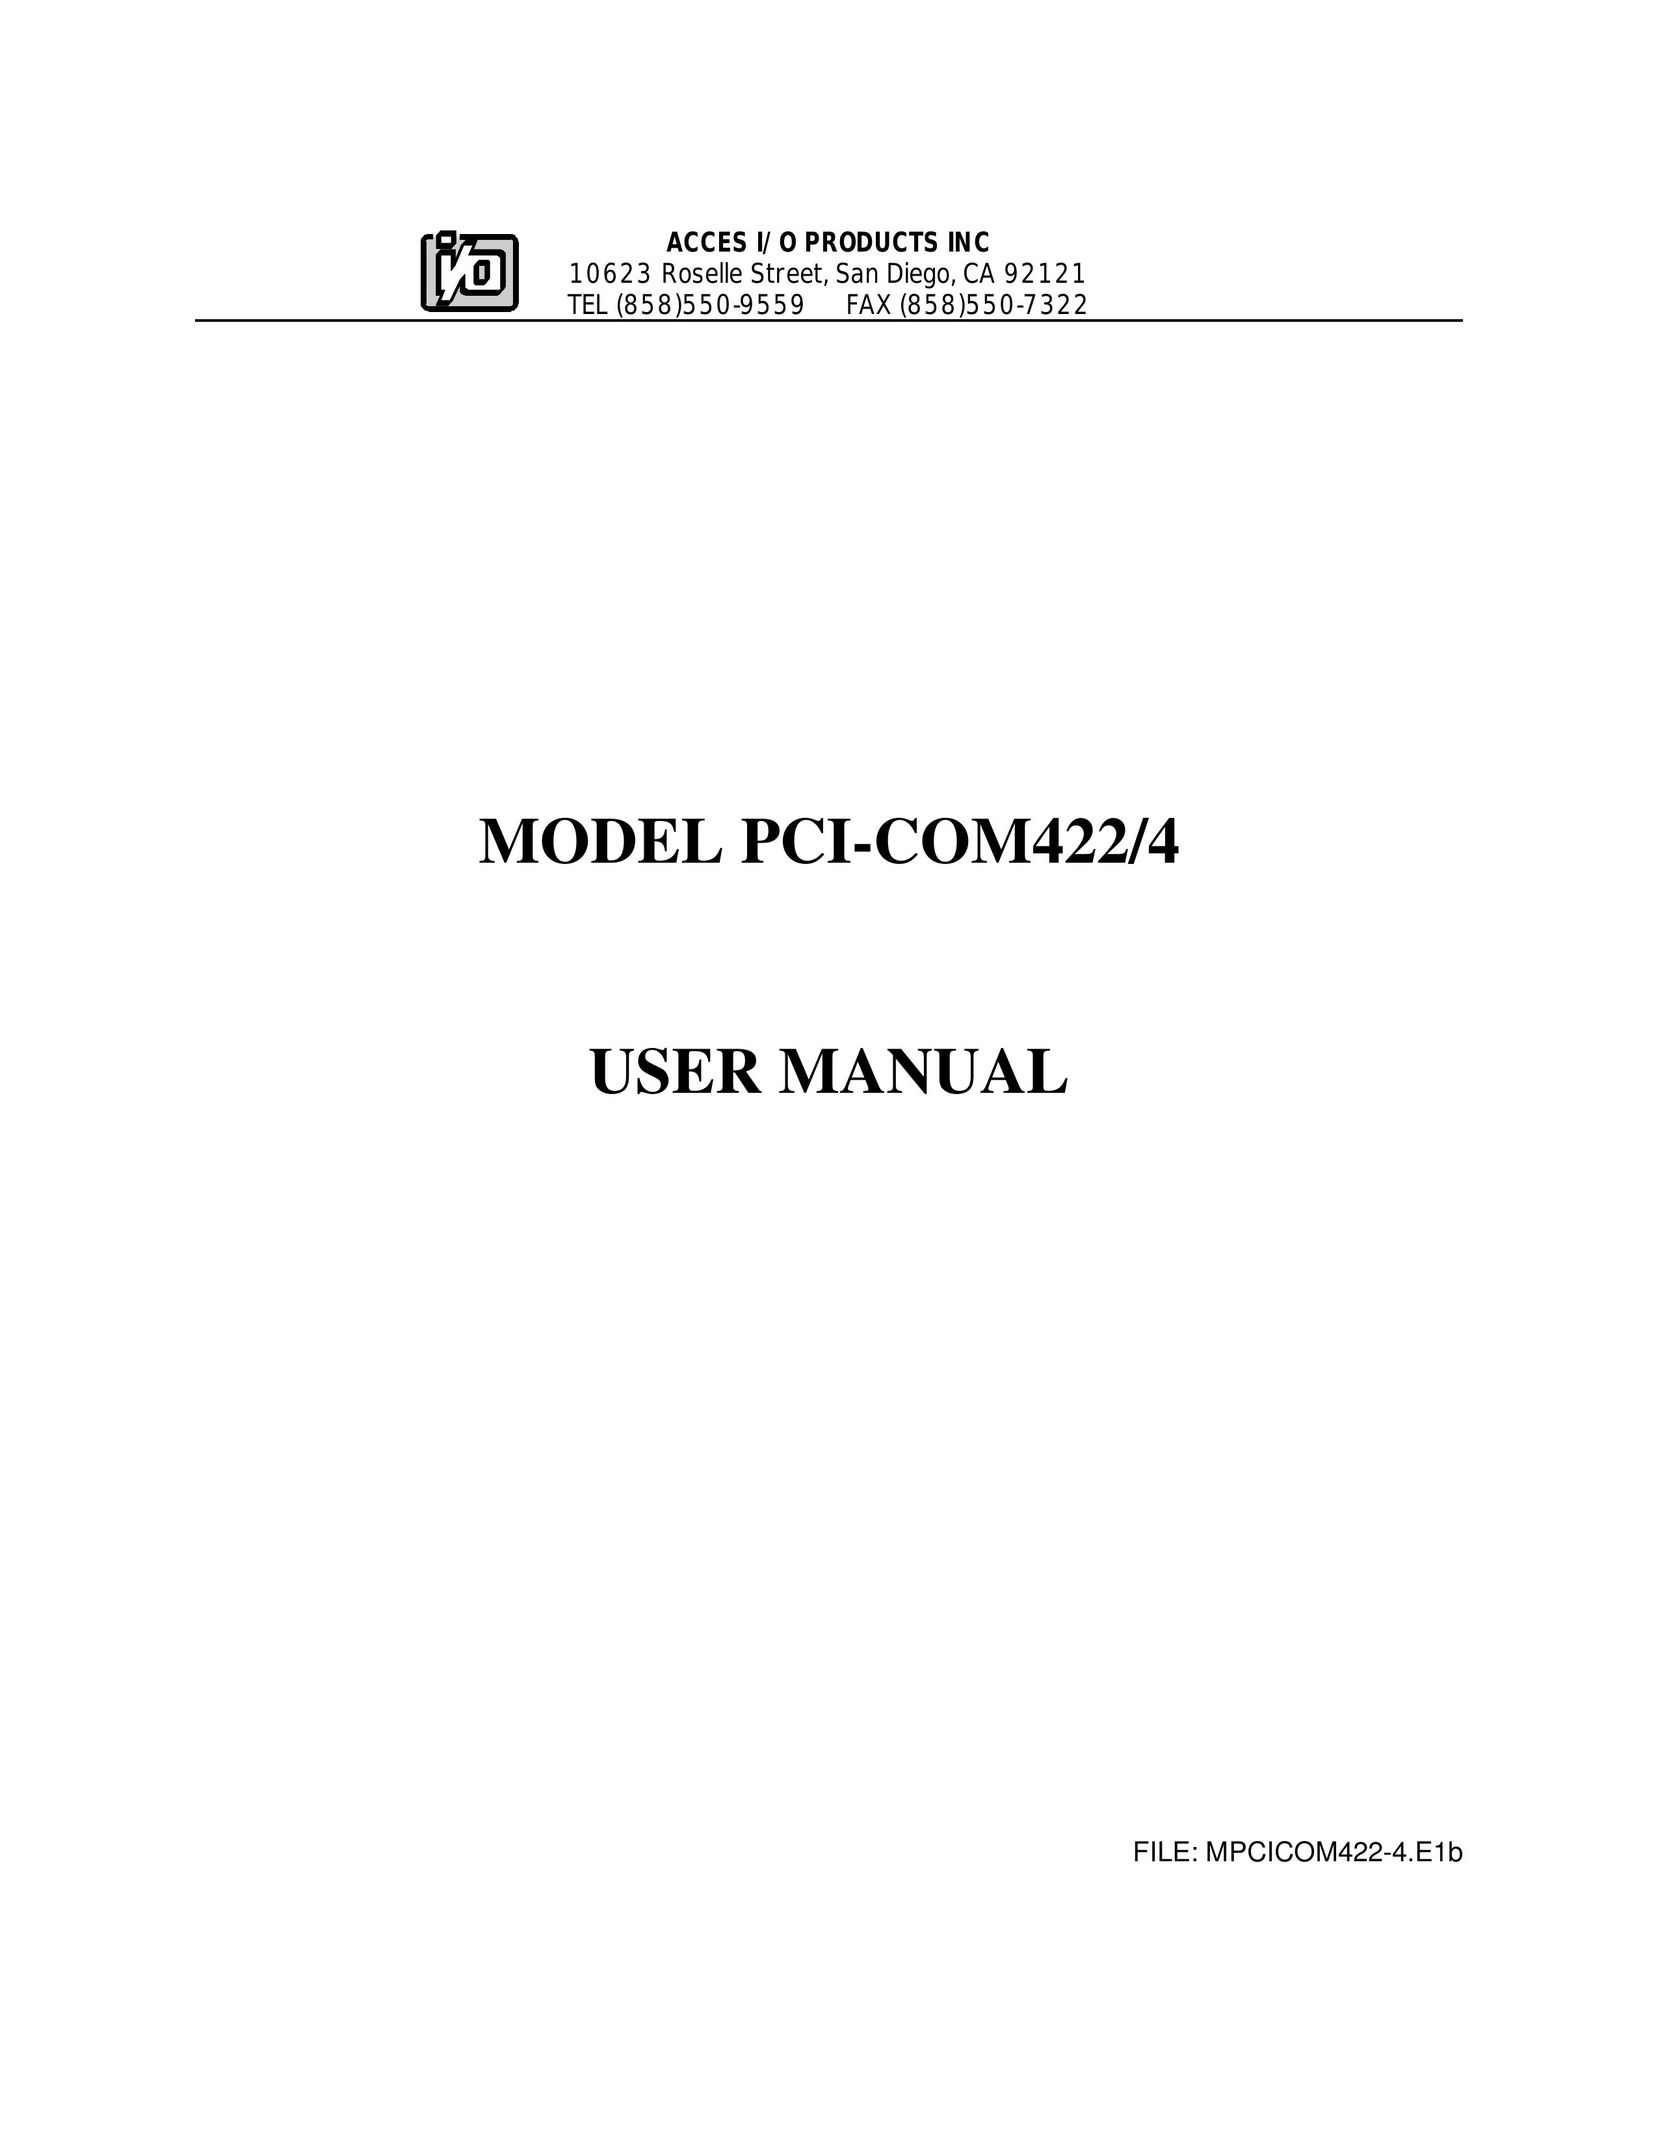 Access PCI-COM422/4 Computer Hardware User Manual